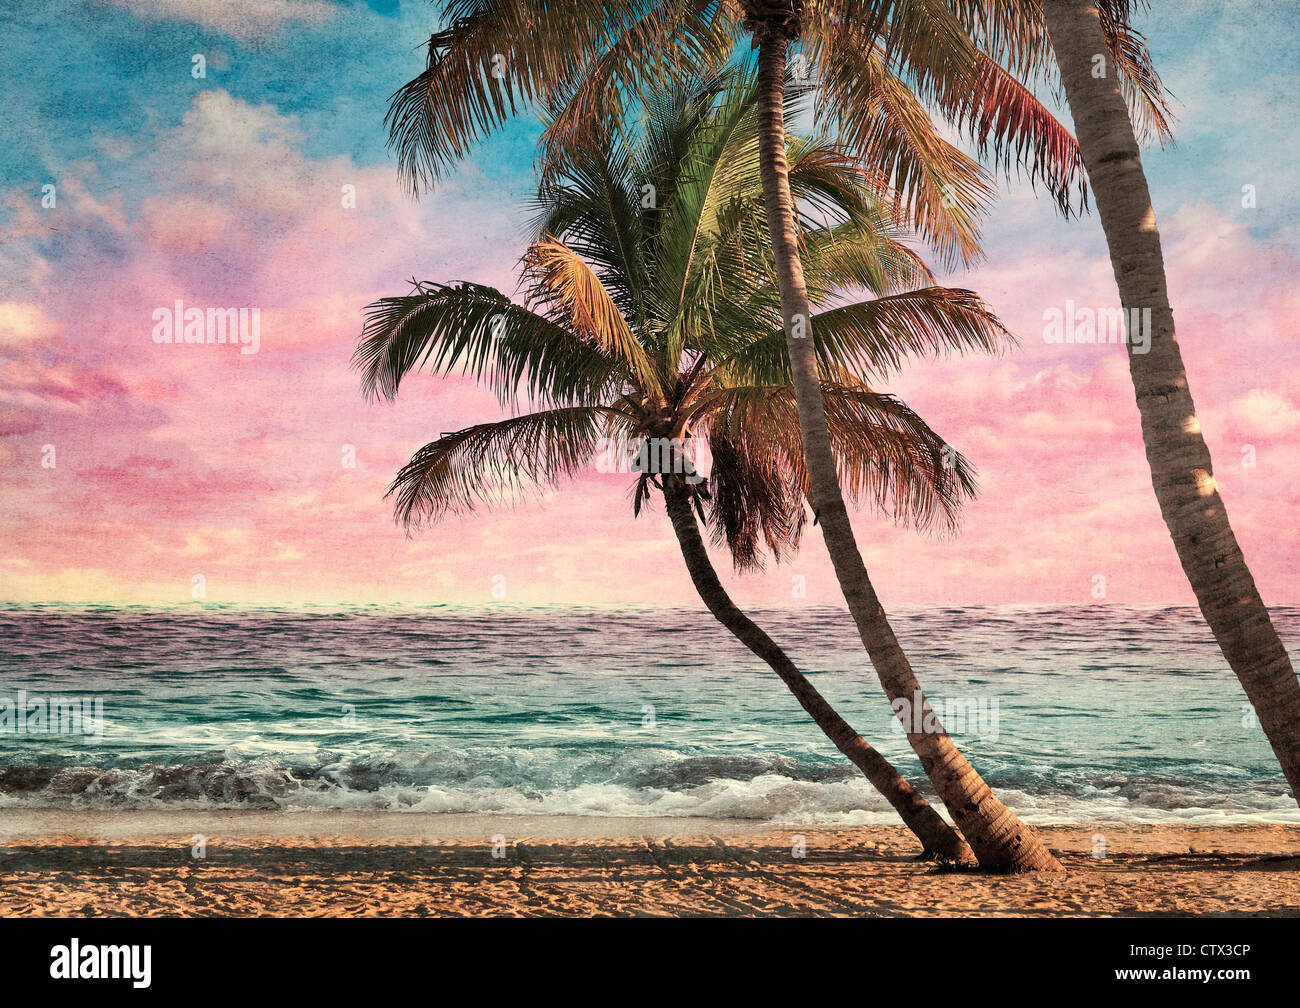 Image de grunge Tropical Beach at Sunset Banque D'Images